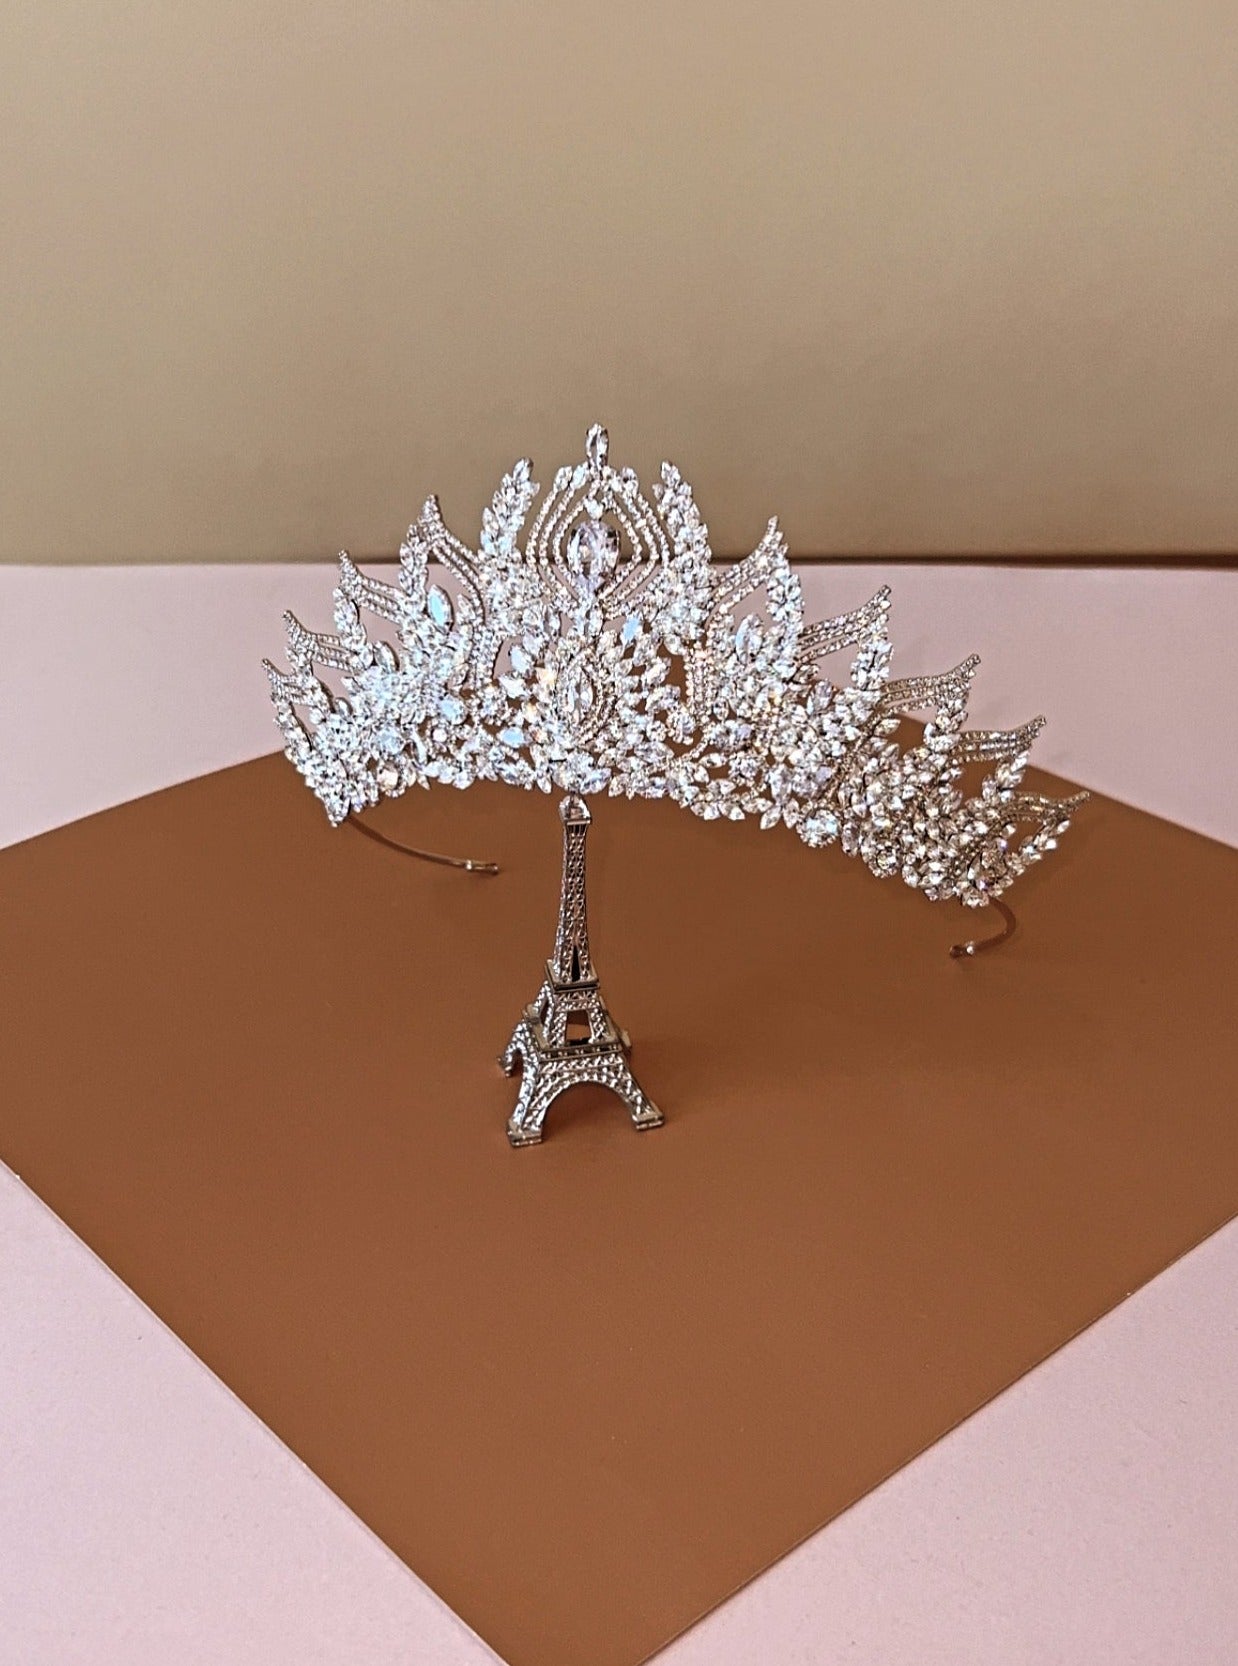 ANTOINETTE Wedding or Quinceanera Crown with Swarovski Crystals